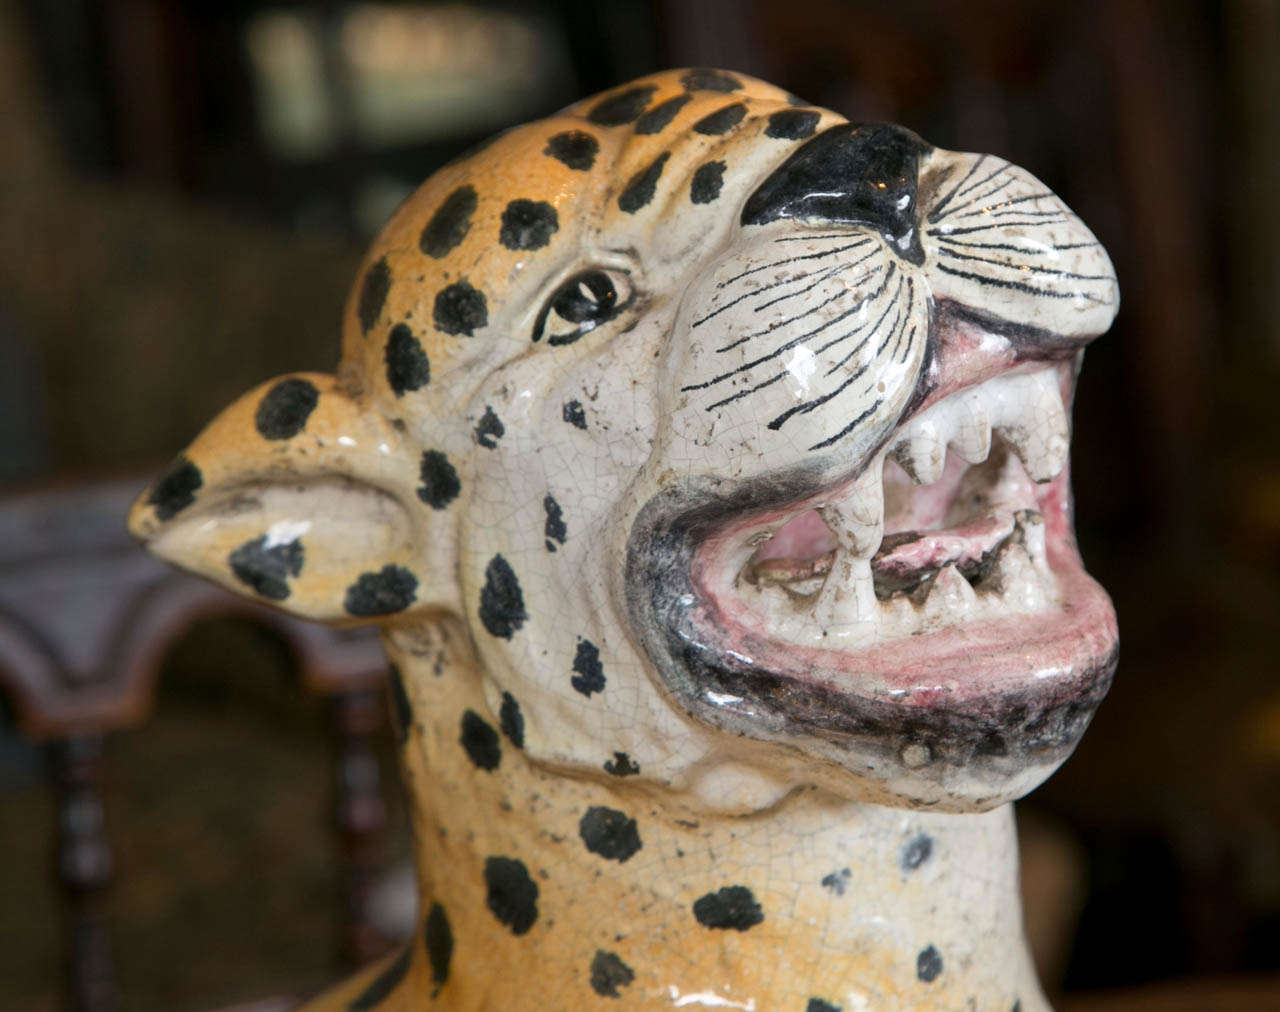 large ceramic leopard statue